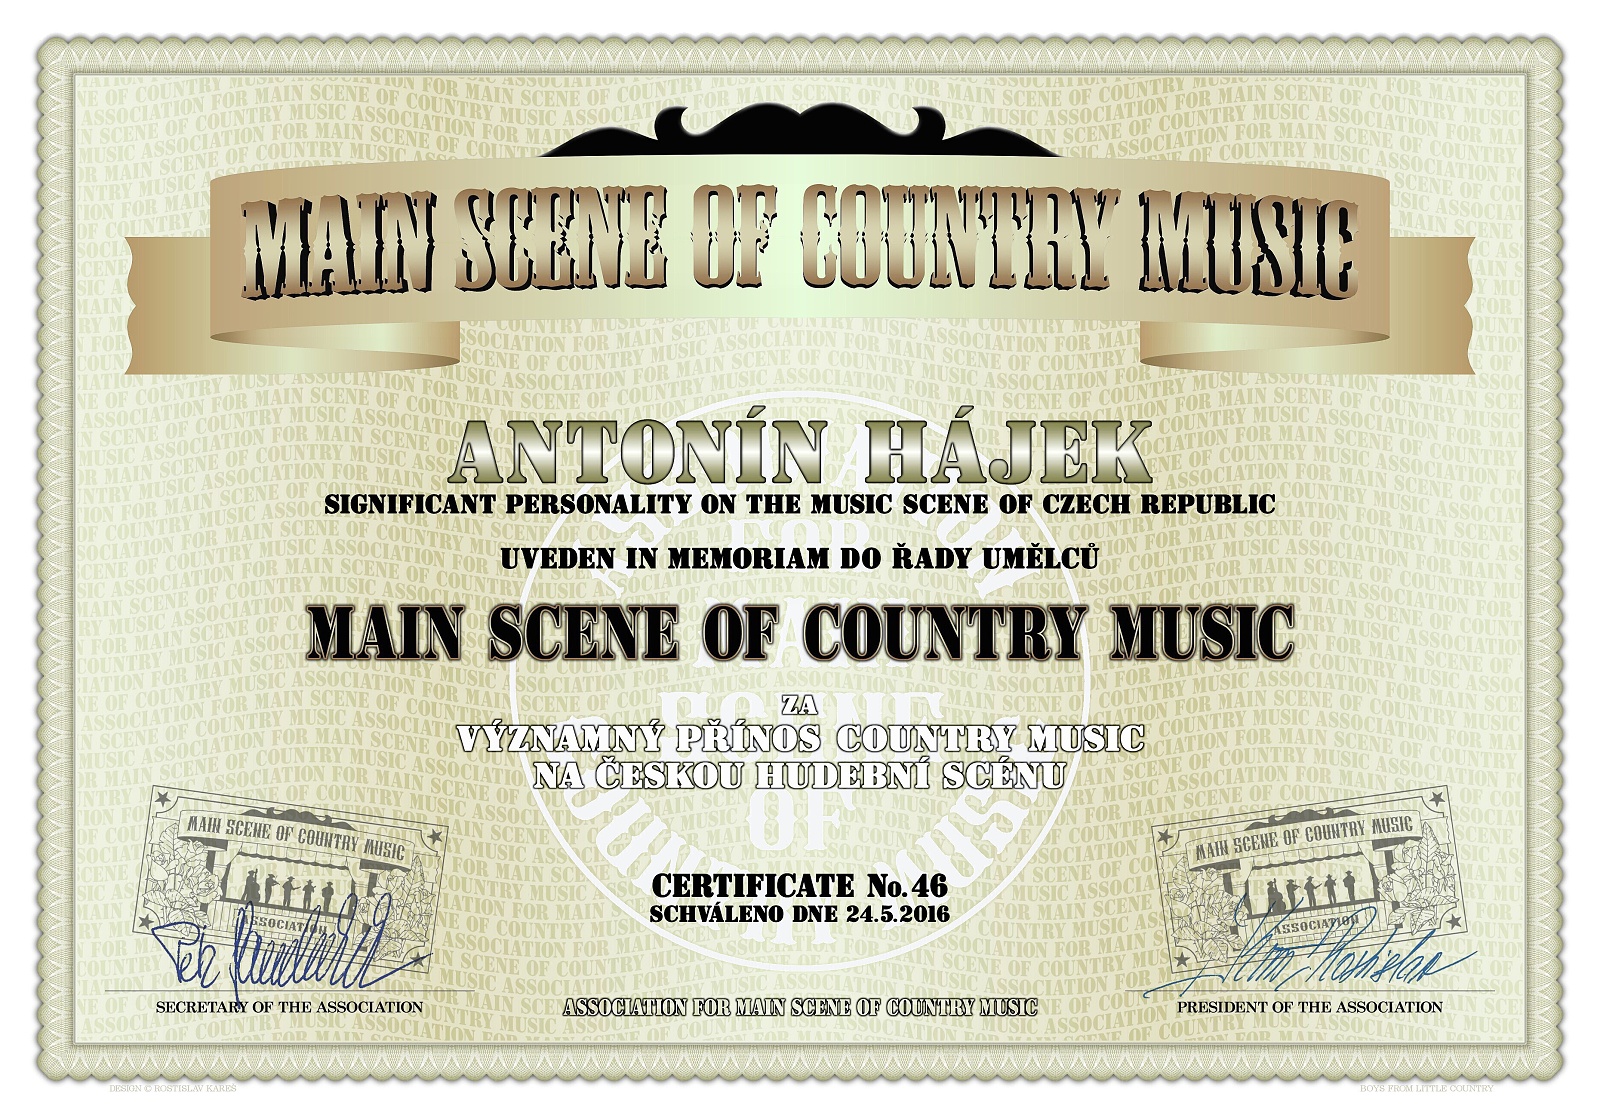 CE 46 - Main Scene of Country Music